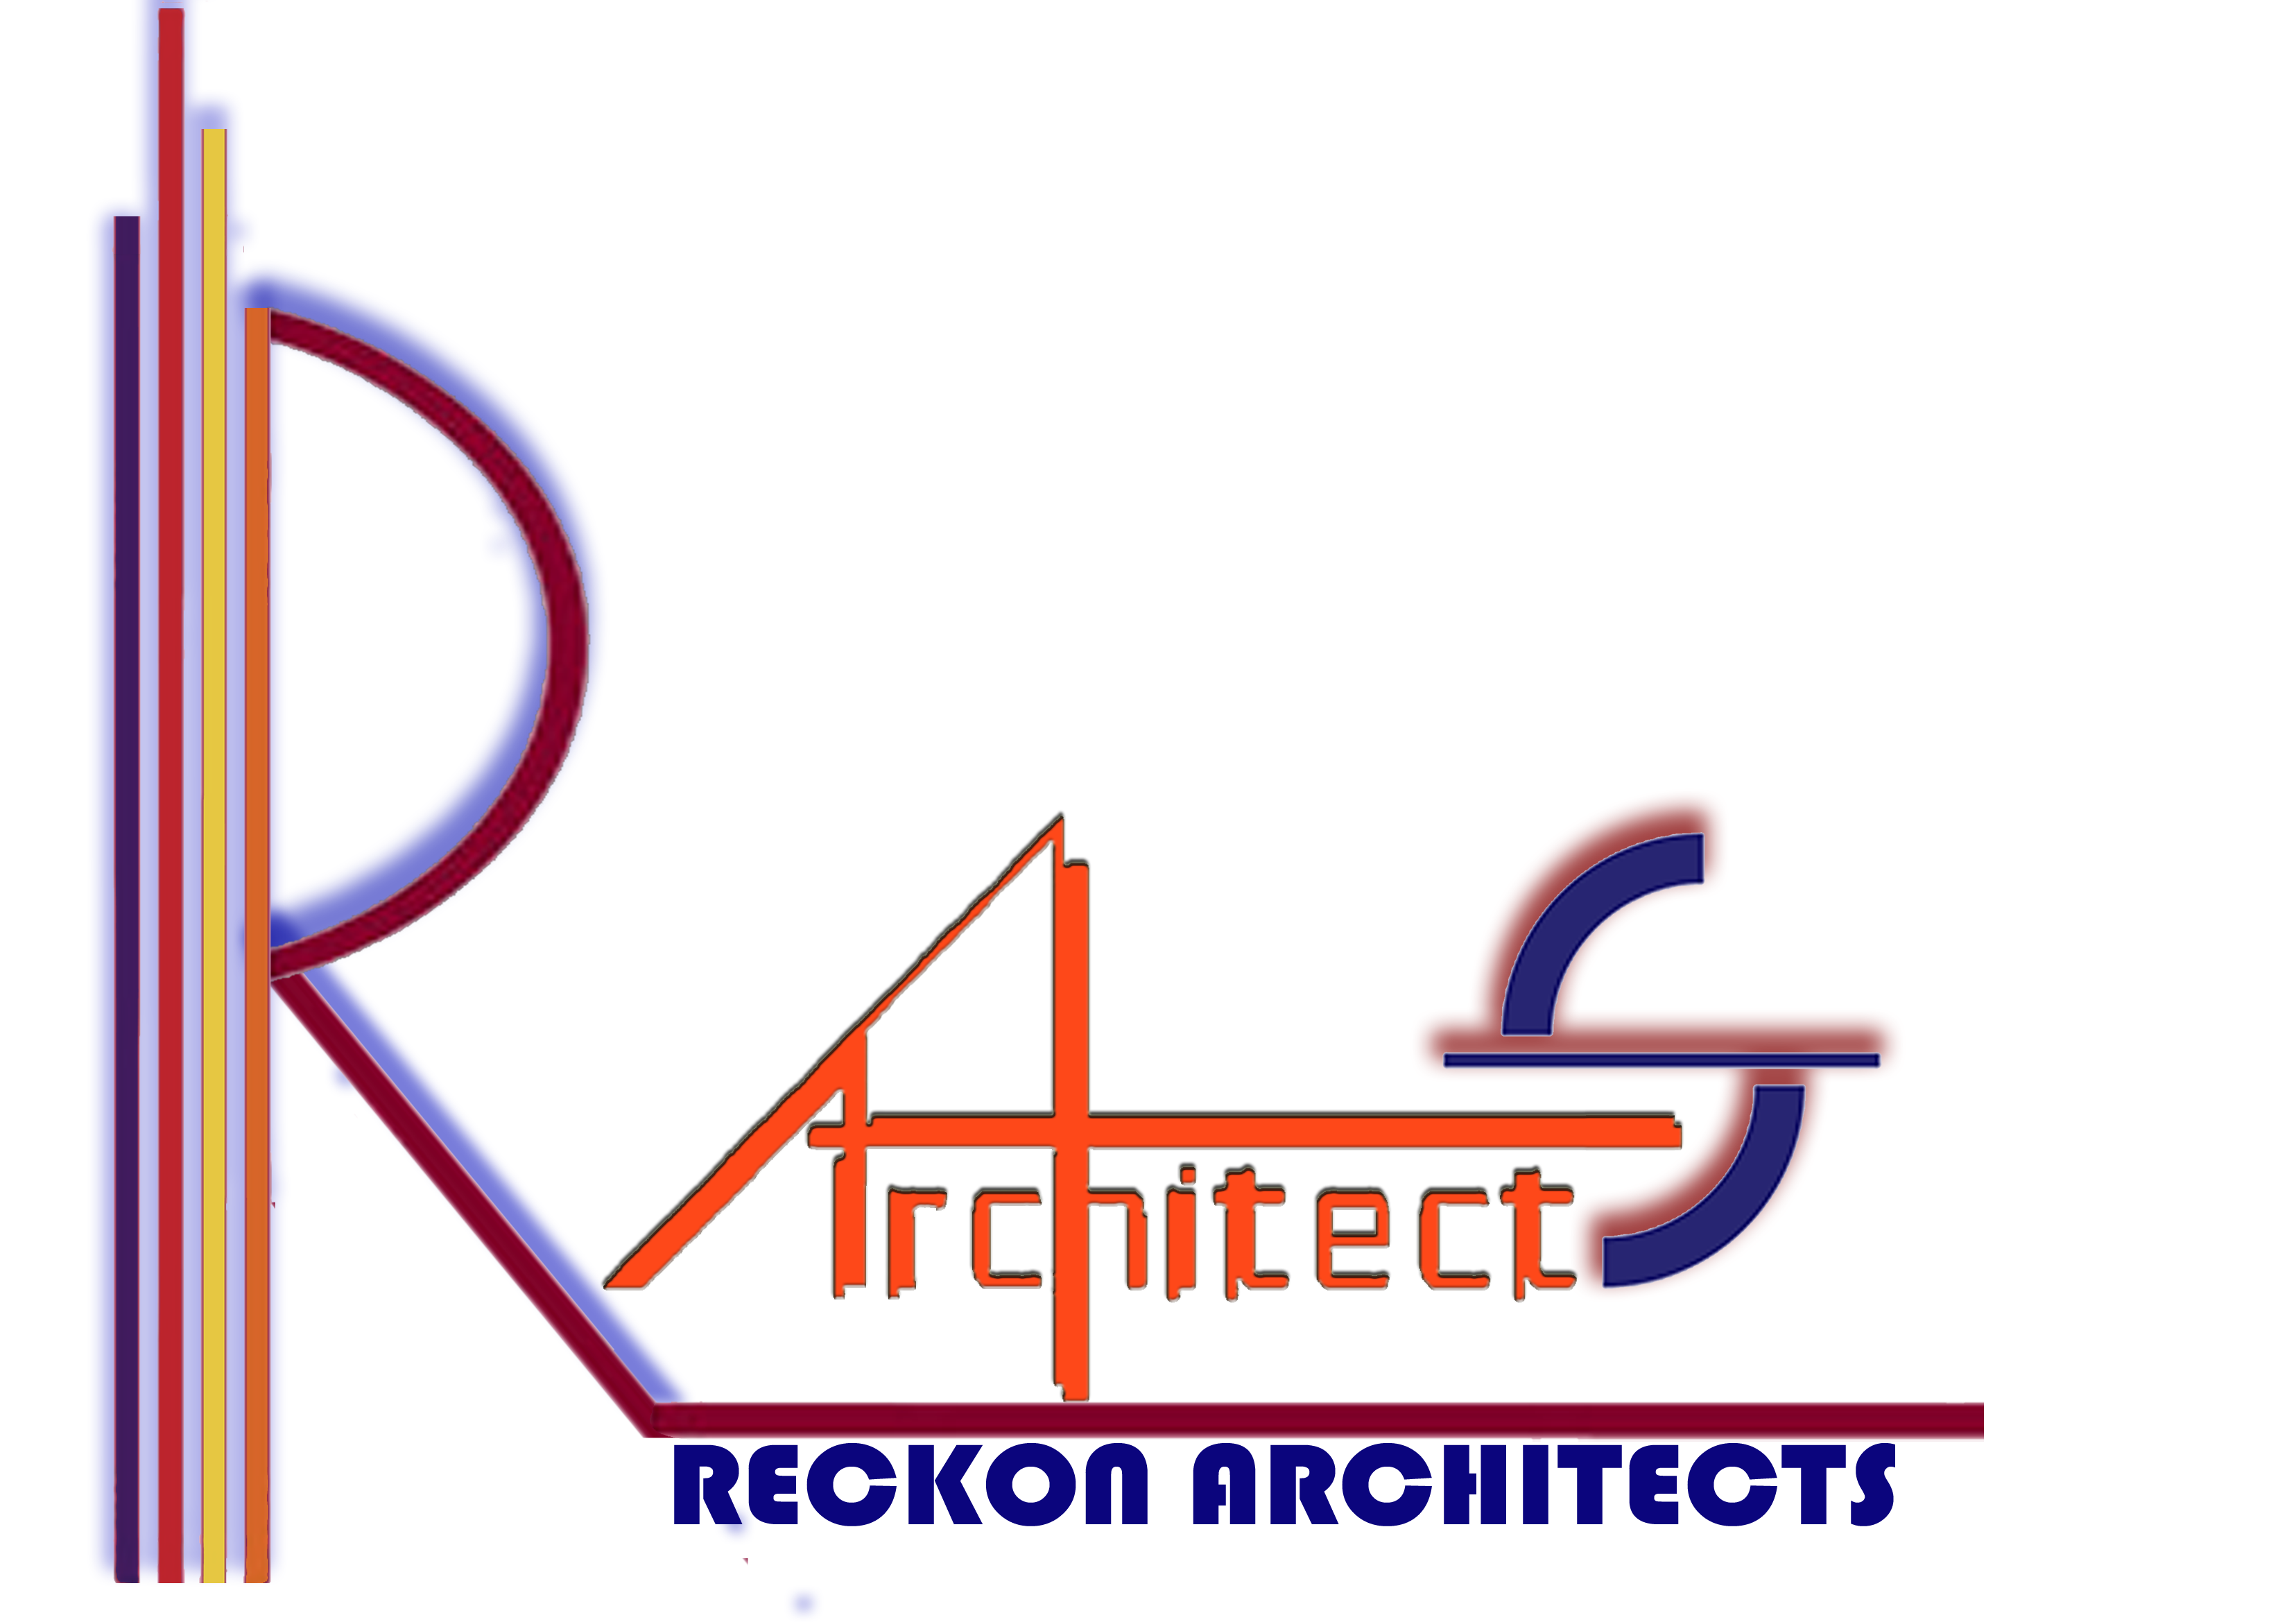 reckon architects logo